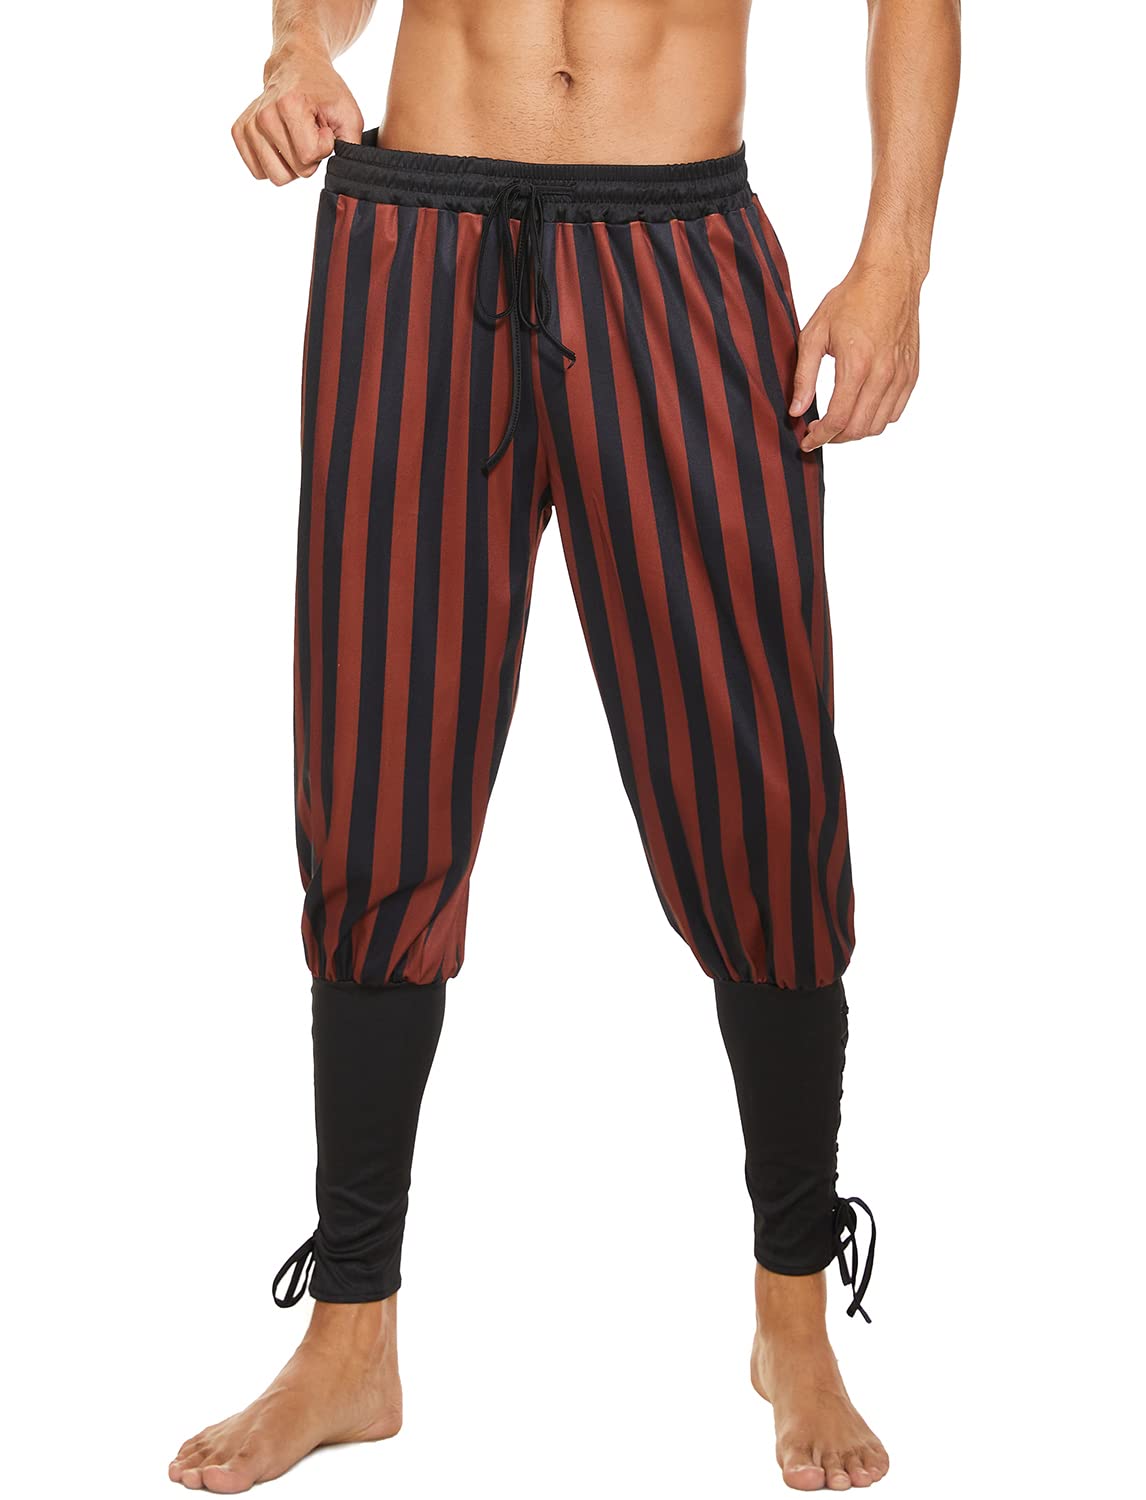 Men's Ankle Banded Pants Medieval Viking Navigator Pirate Costume Trousers Renaissance Gothic Pants Large Black-short